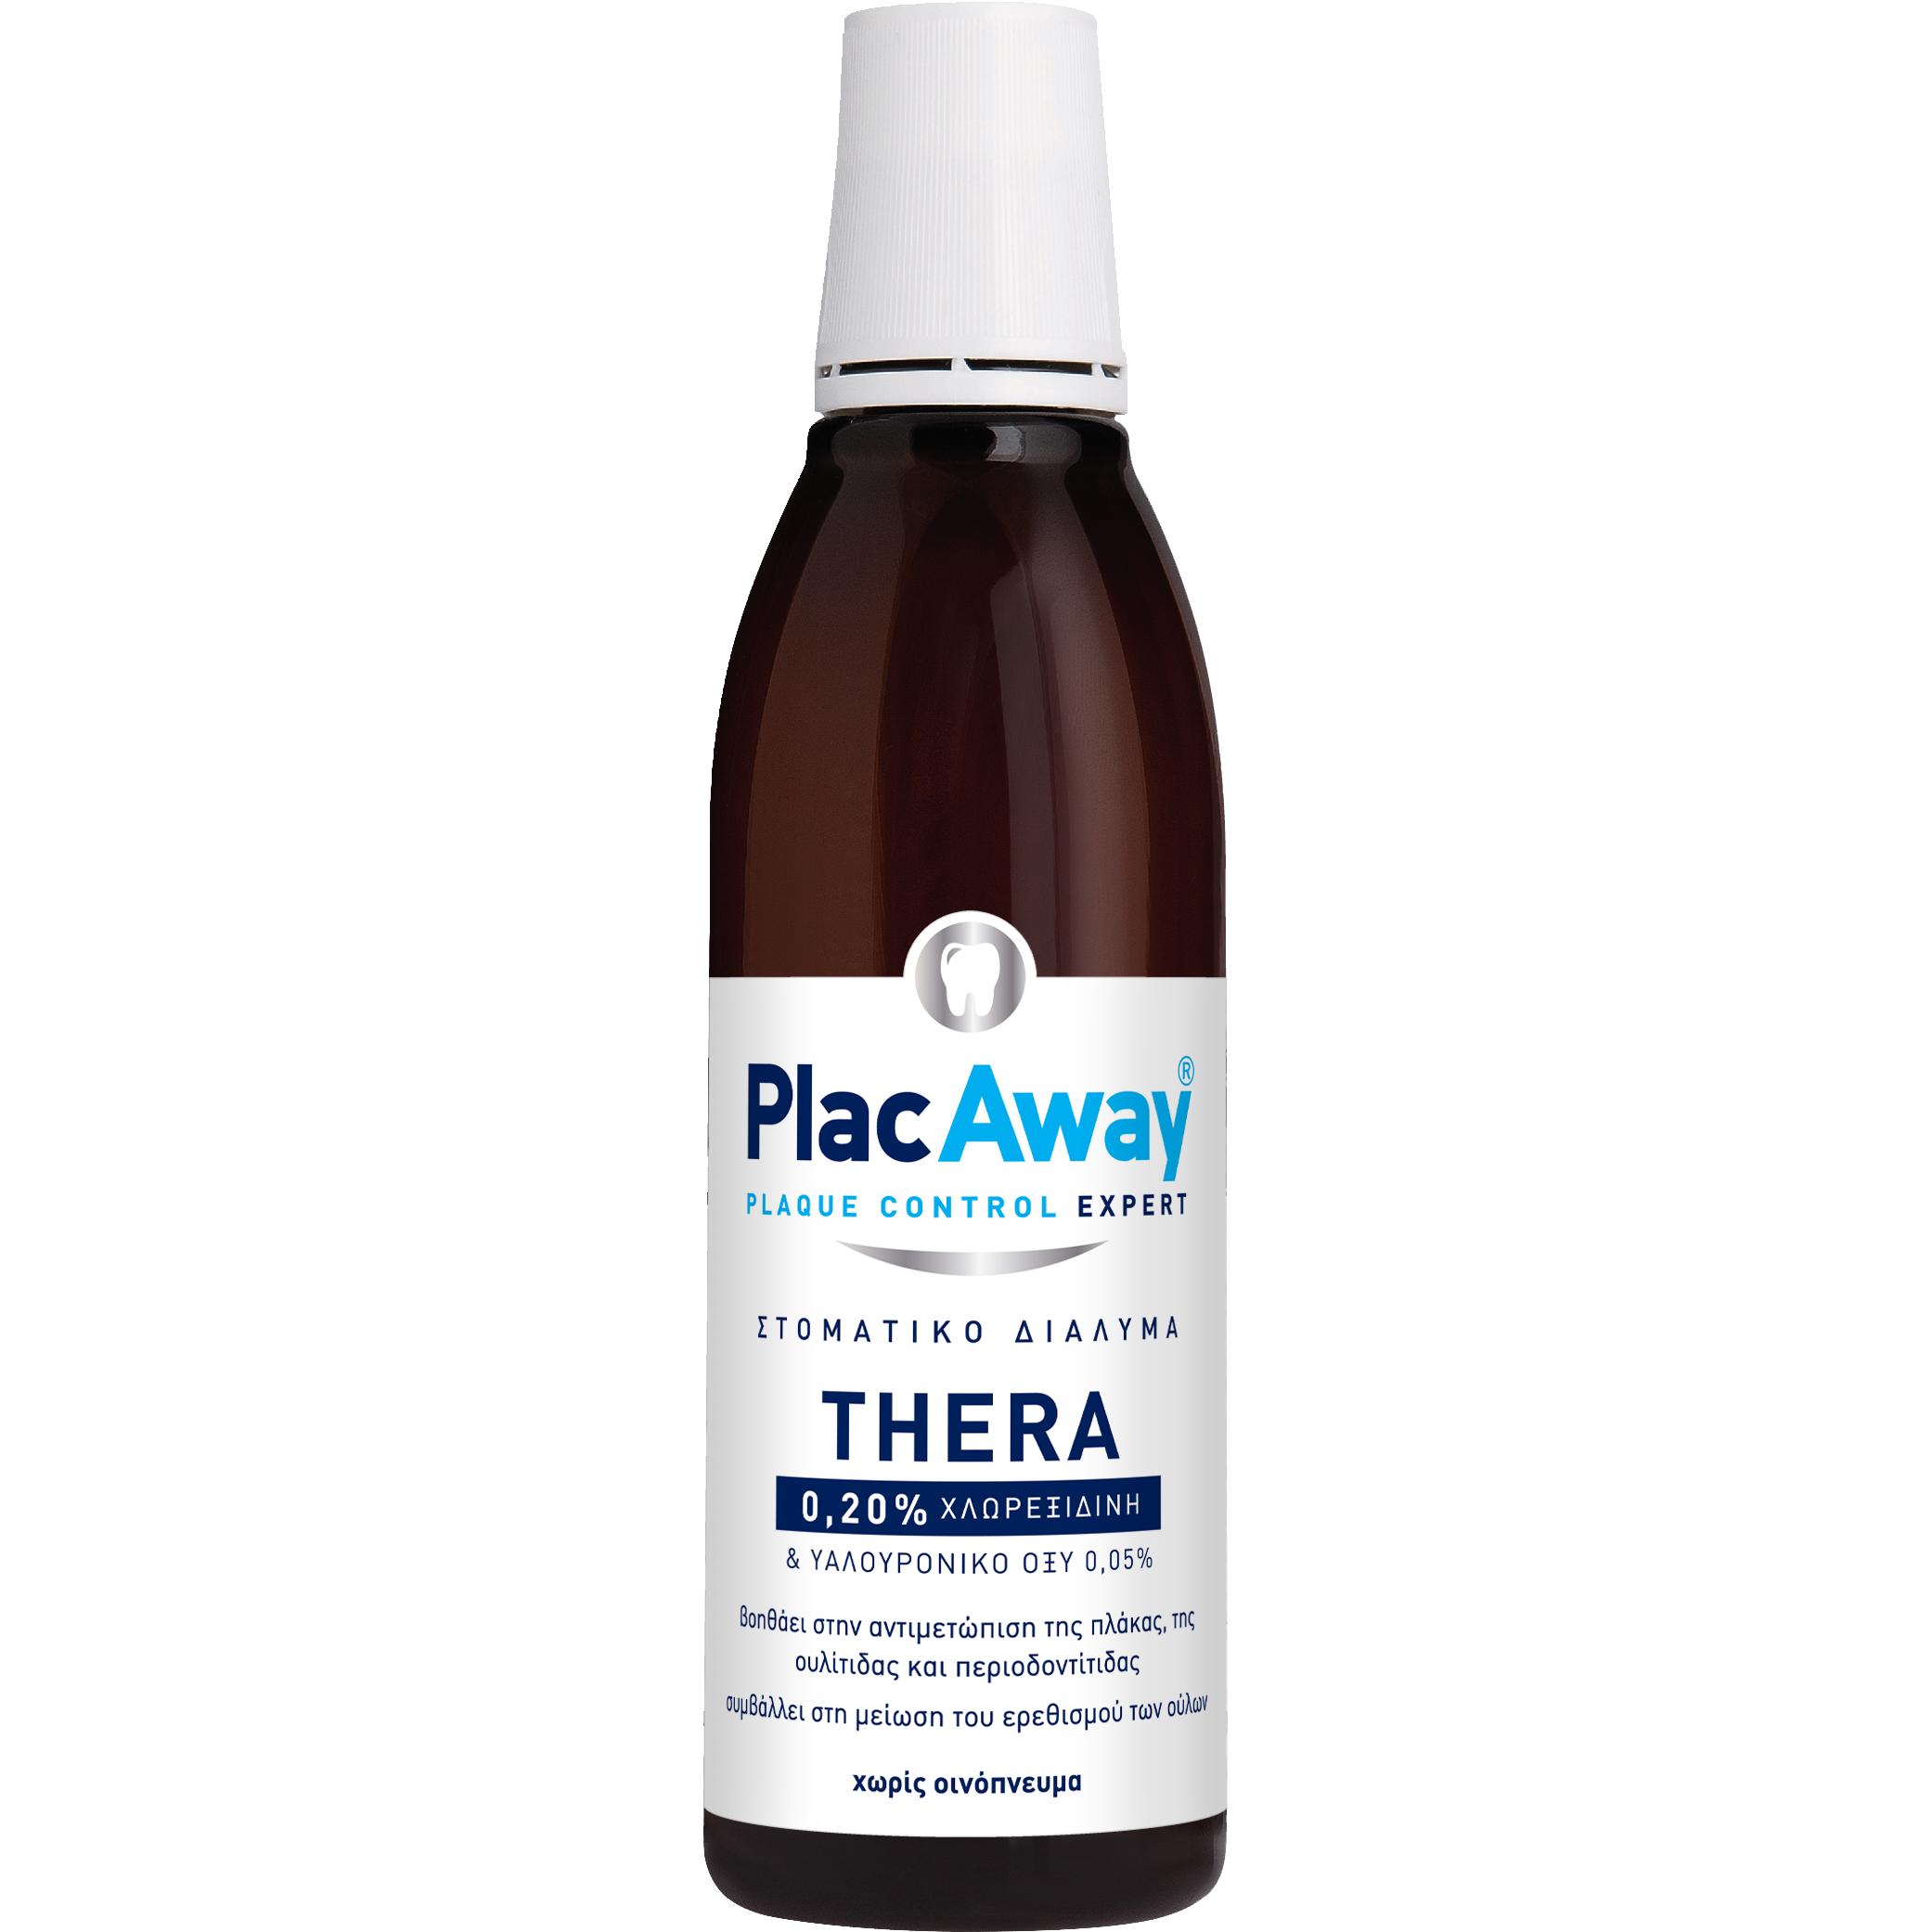 Plac Away Thera Plus 0.2% Στοματικό Διάλυμα που Βοηθάει στην Αντιμετώπιση Ουλίτιδας & Περιοδοντίτιδας. 1216